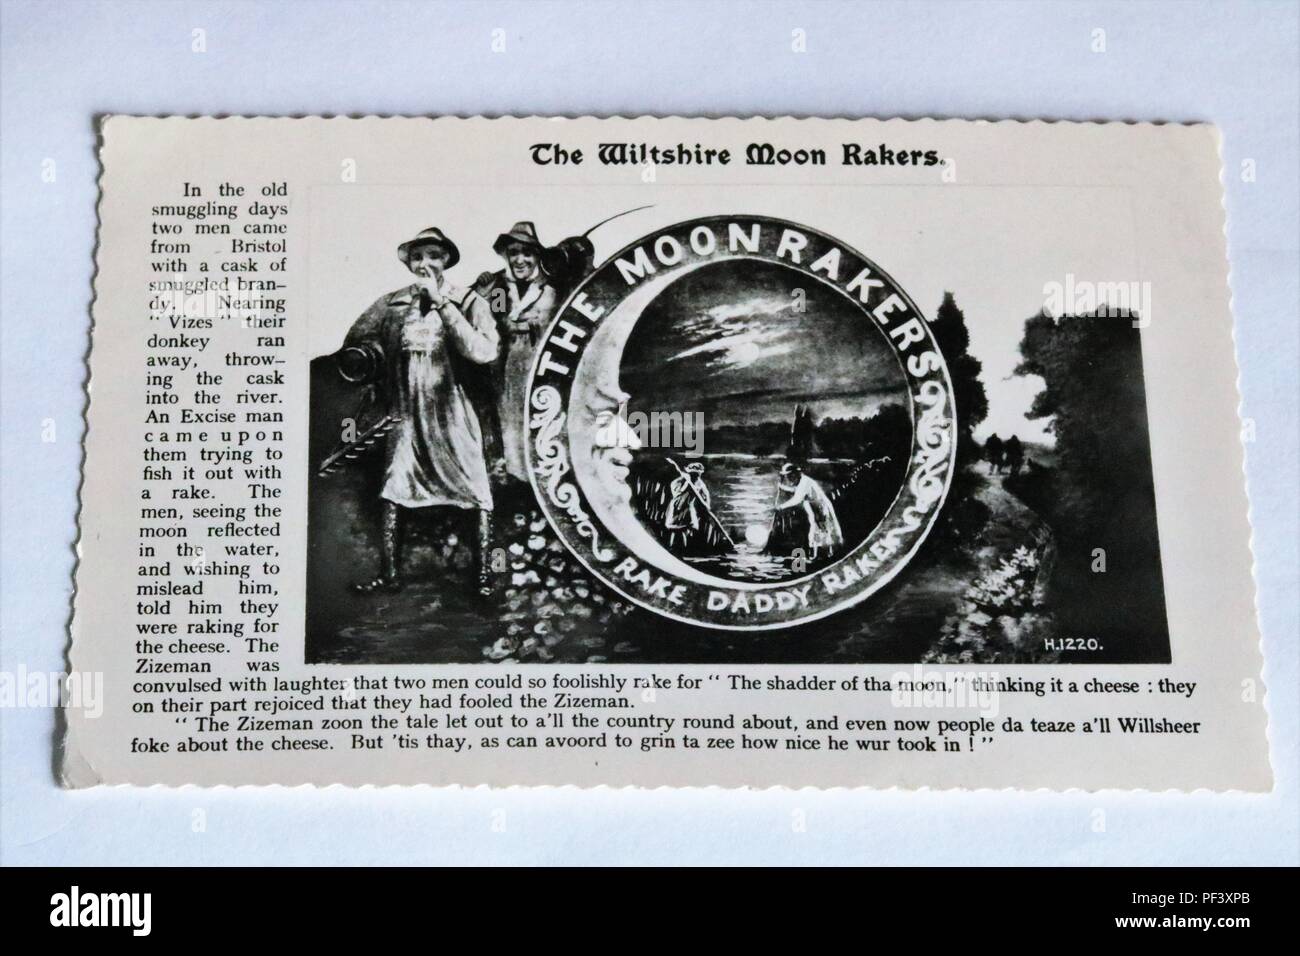 The Wiltshire Moon Rakers - Rake Daddy Rake - black and white postcard Stock Photo